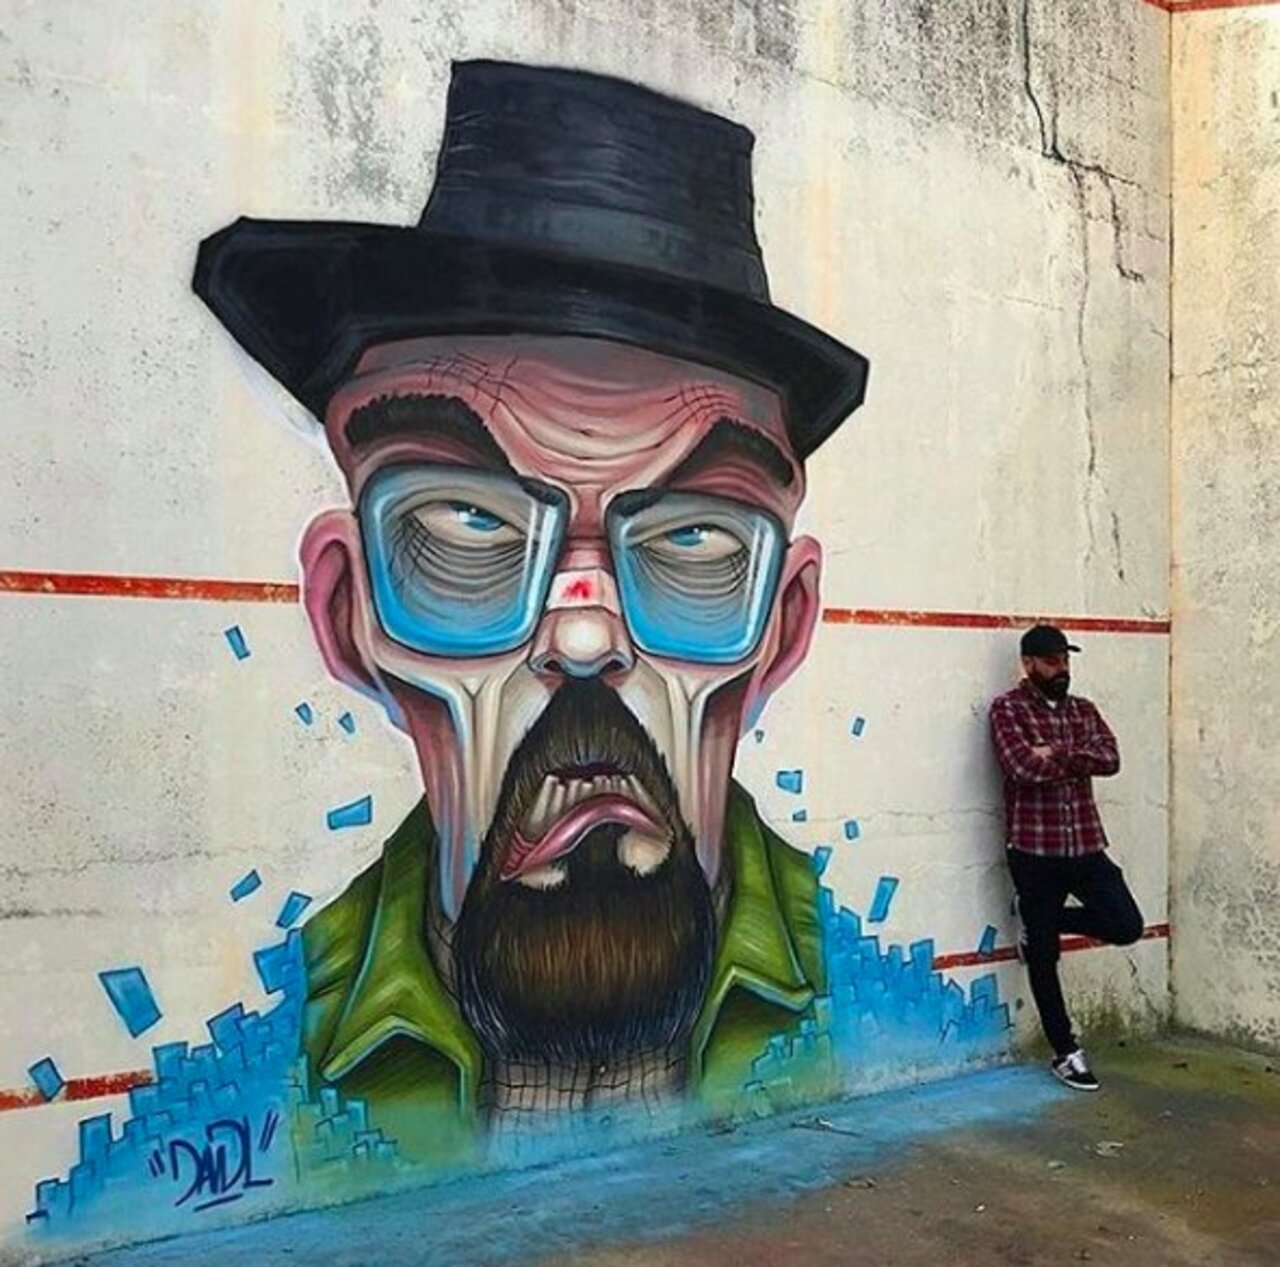 An awesome portrait of Walter White in #Spain by #DavidL! -- #globalstreetart #streetart #art #graffiti https://t.co/C3kB7UxnQE